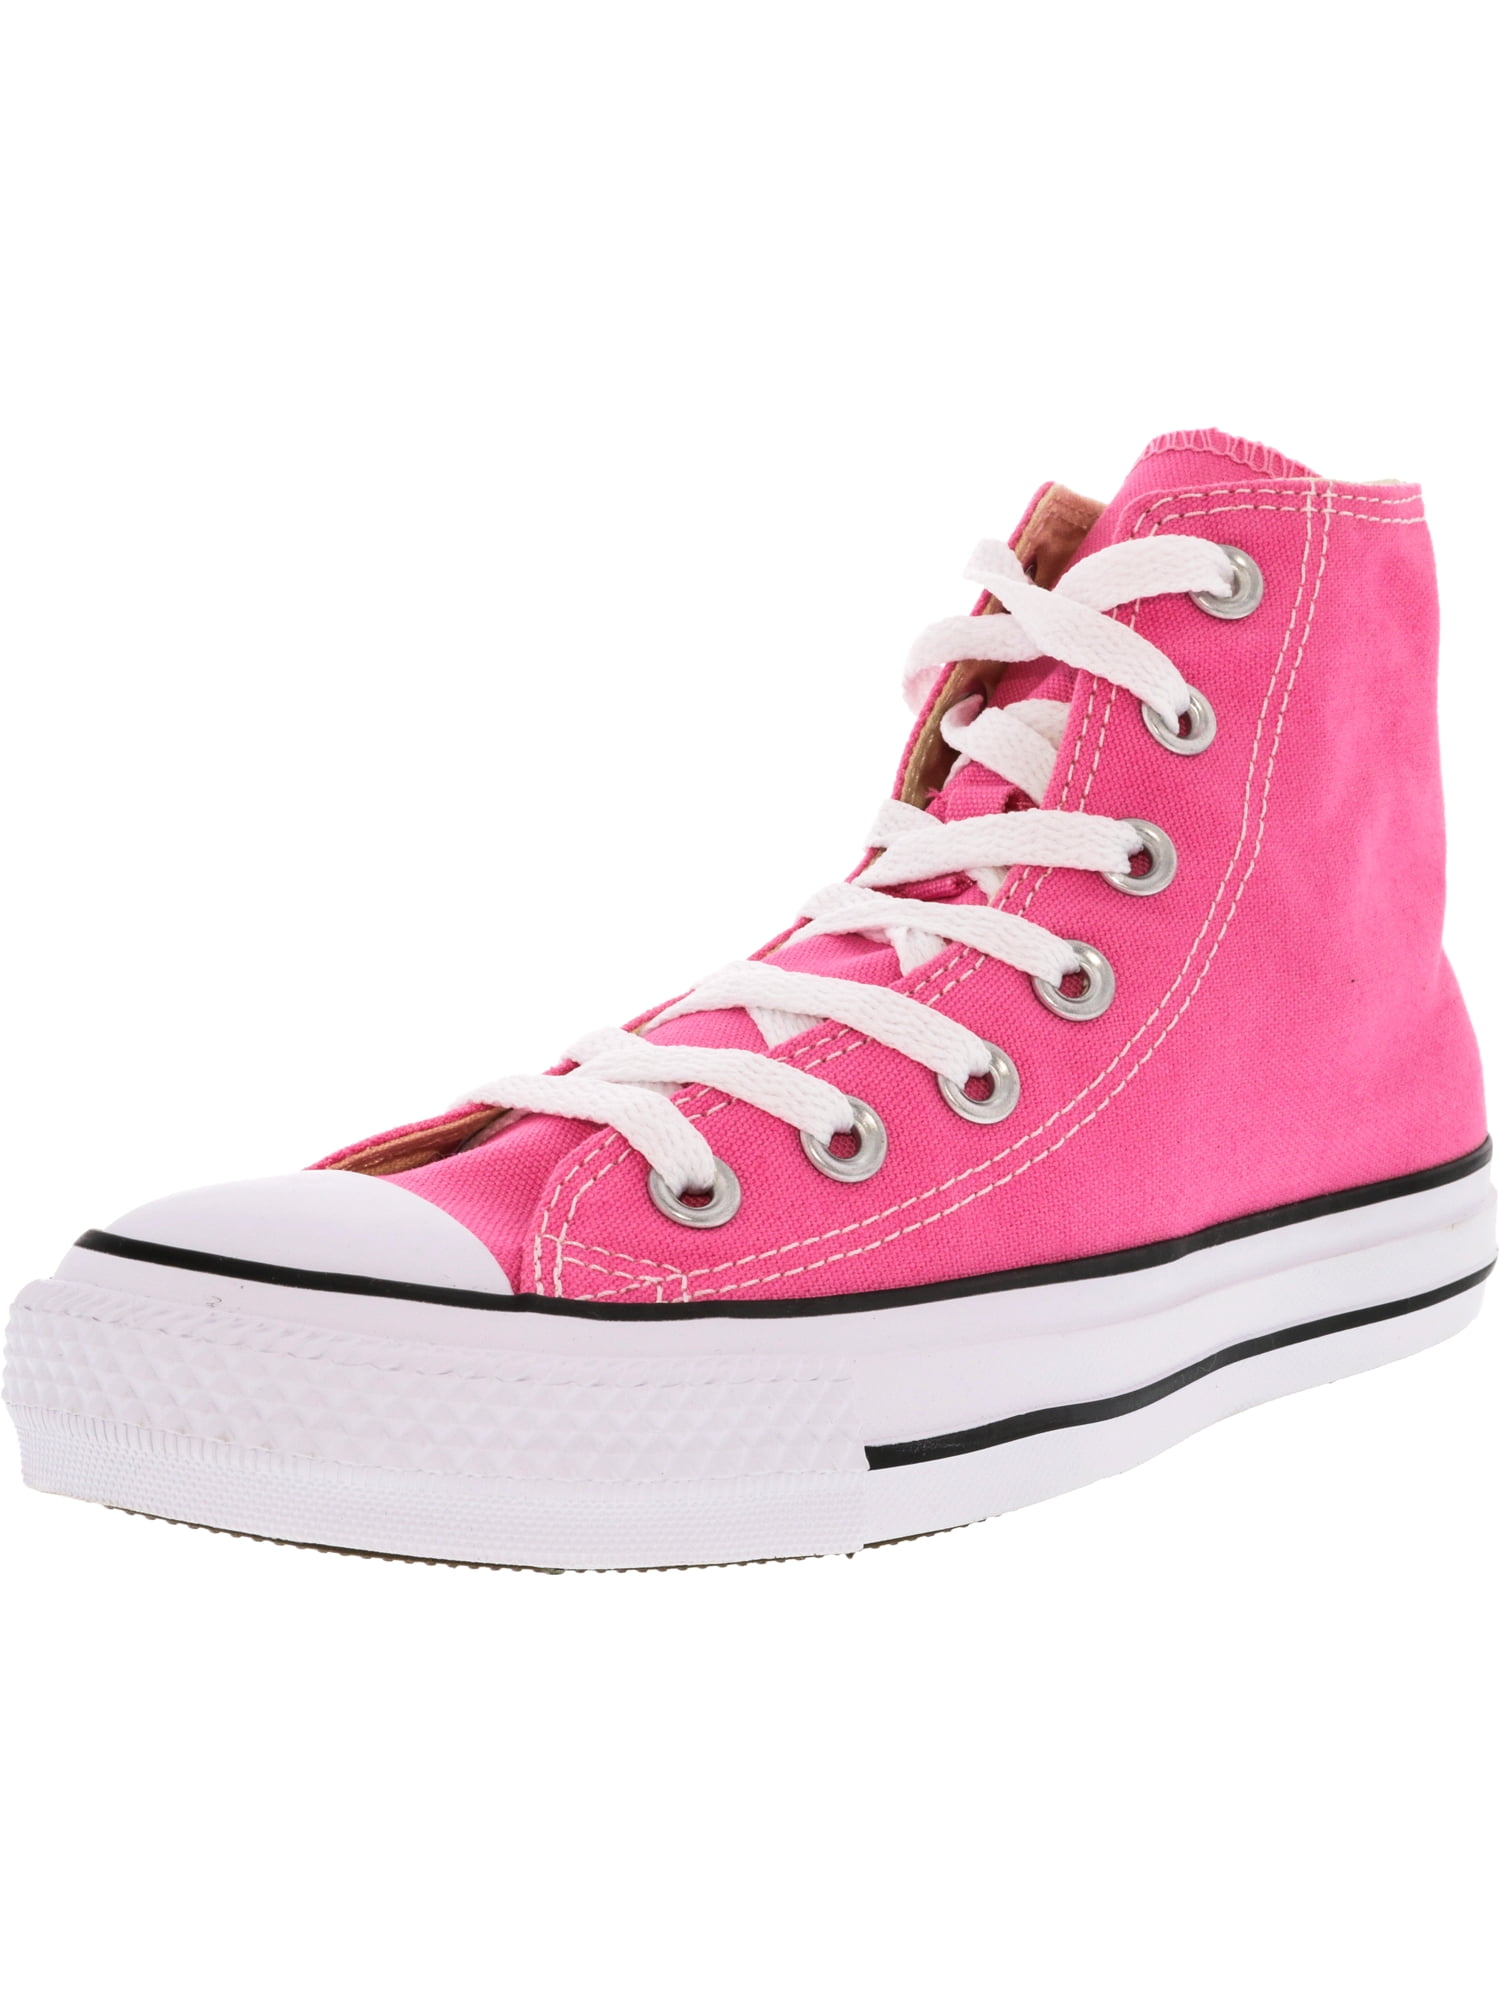 Converse Converse All Star Hi Pink Ankle High Fashion Sneaker 10m